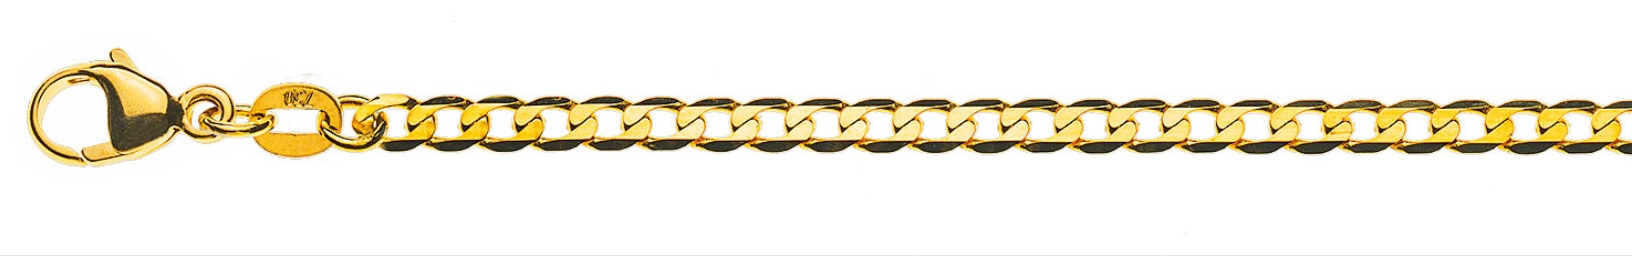 AURONOS Prestige Necklace yellow gold 18K curb chain extra flat diamond 45cm 3.1mm